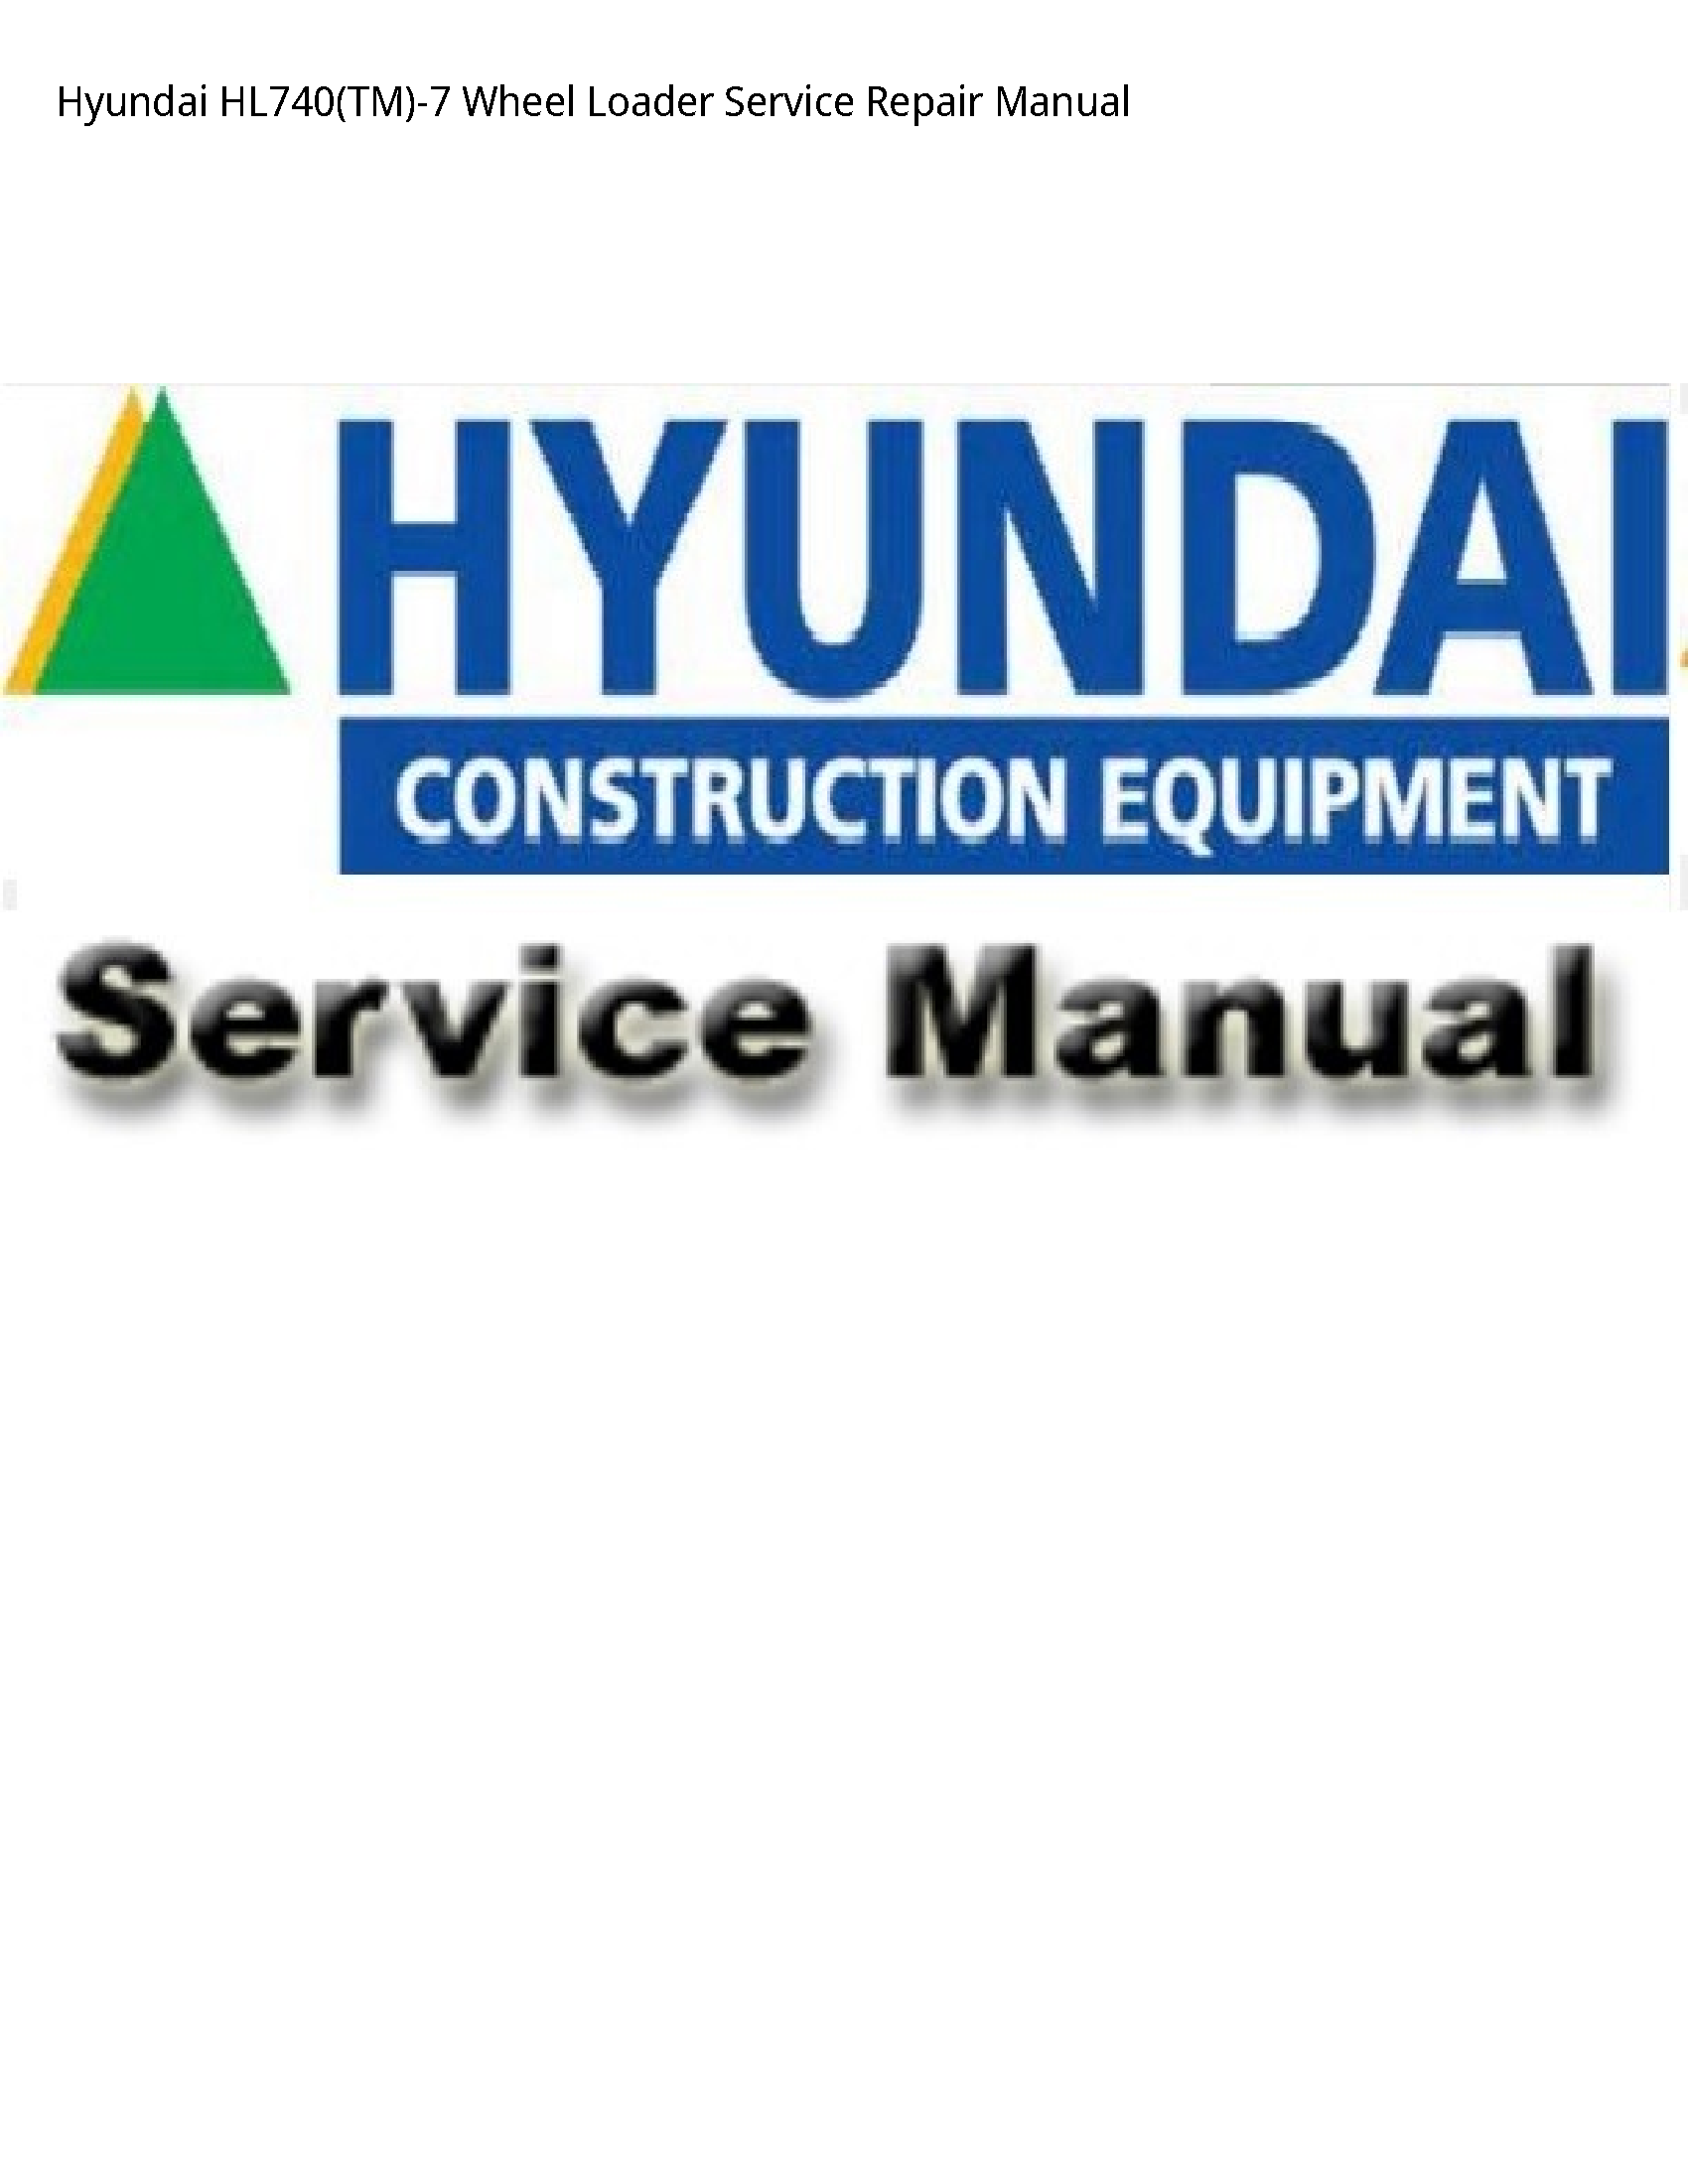 Hyundai HL740(TM)-7 Wheel Loader manual